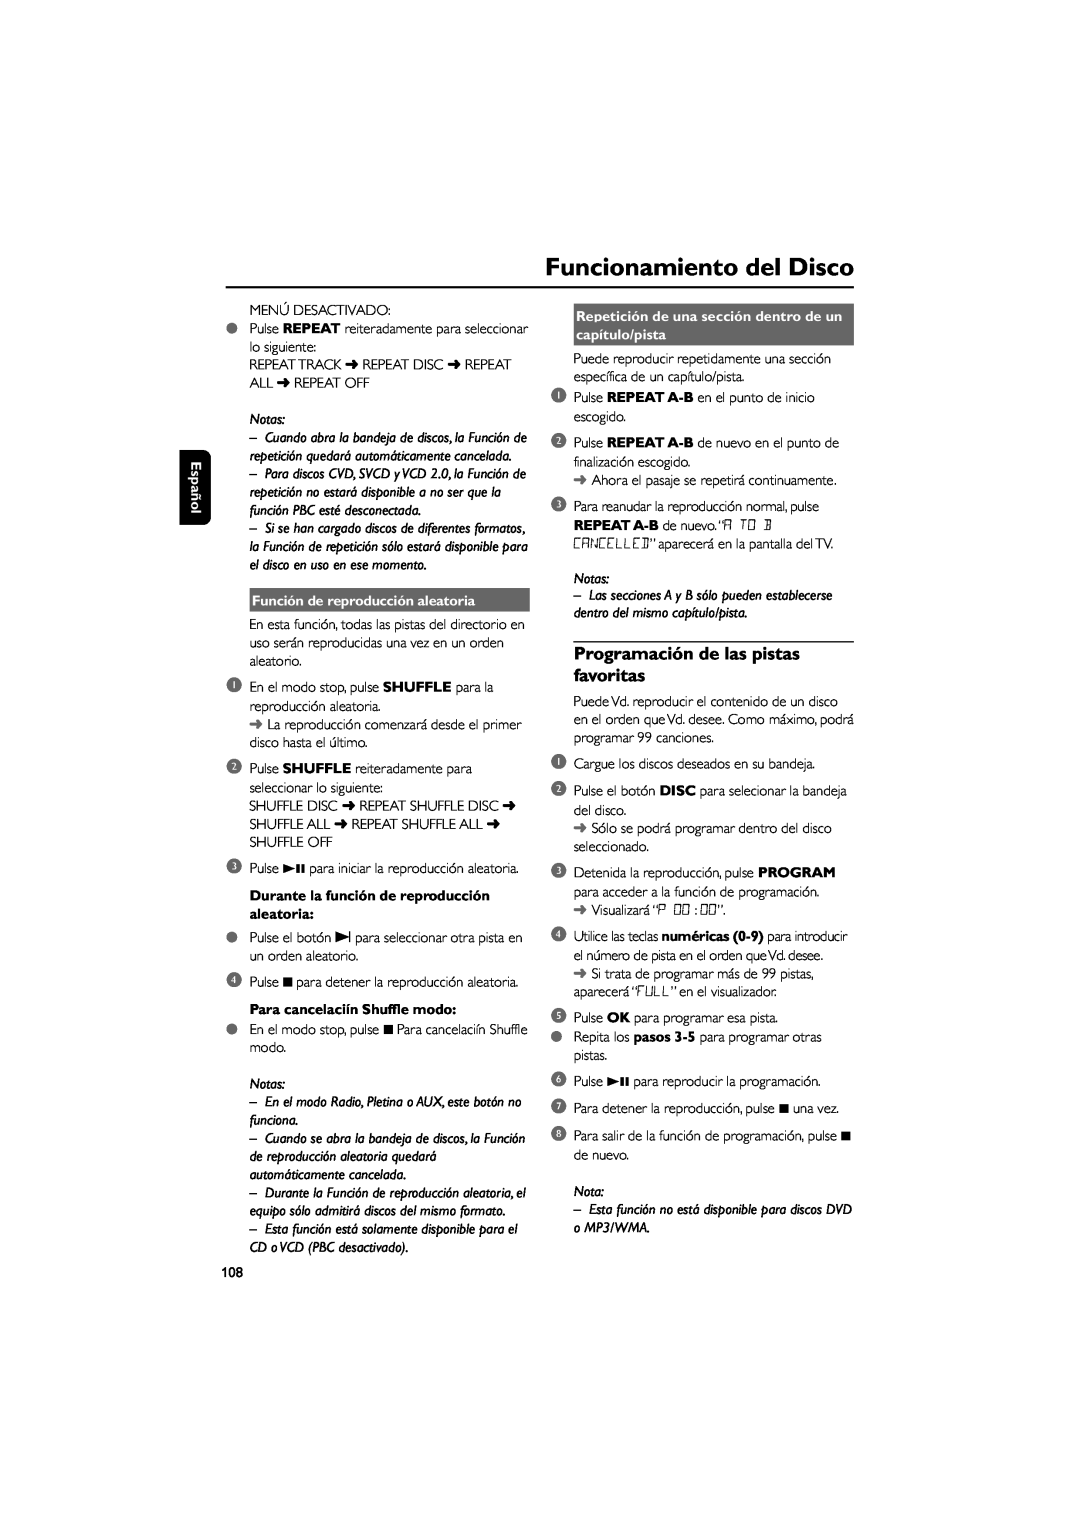 Philips FWD39 manual Función de reproducción aleatoria, Durante la función de reproducción aleatoria, Español, Notas 